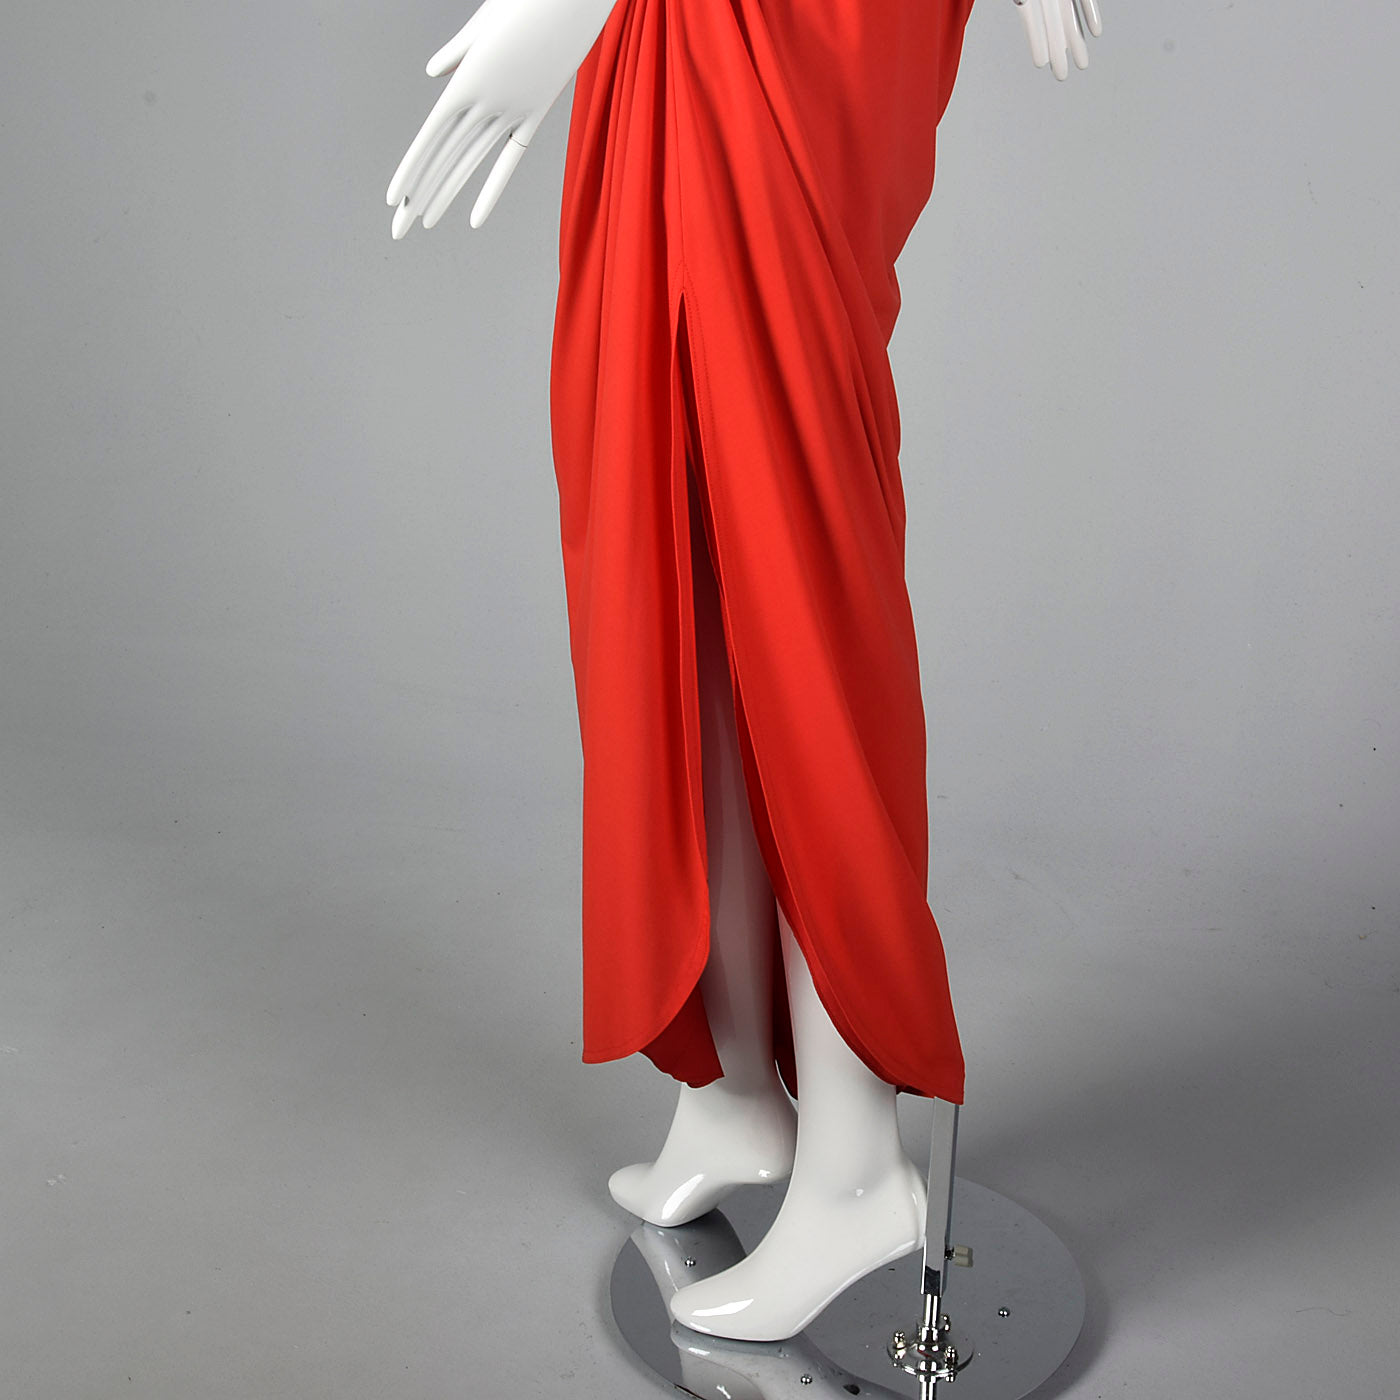 1980s Saks Fifth Avenue Red Bias Cut Dress